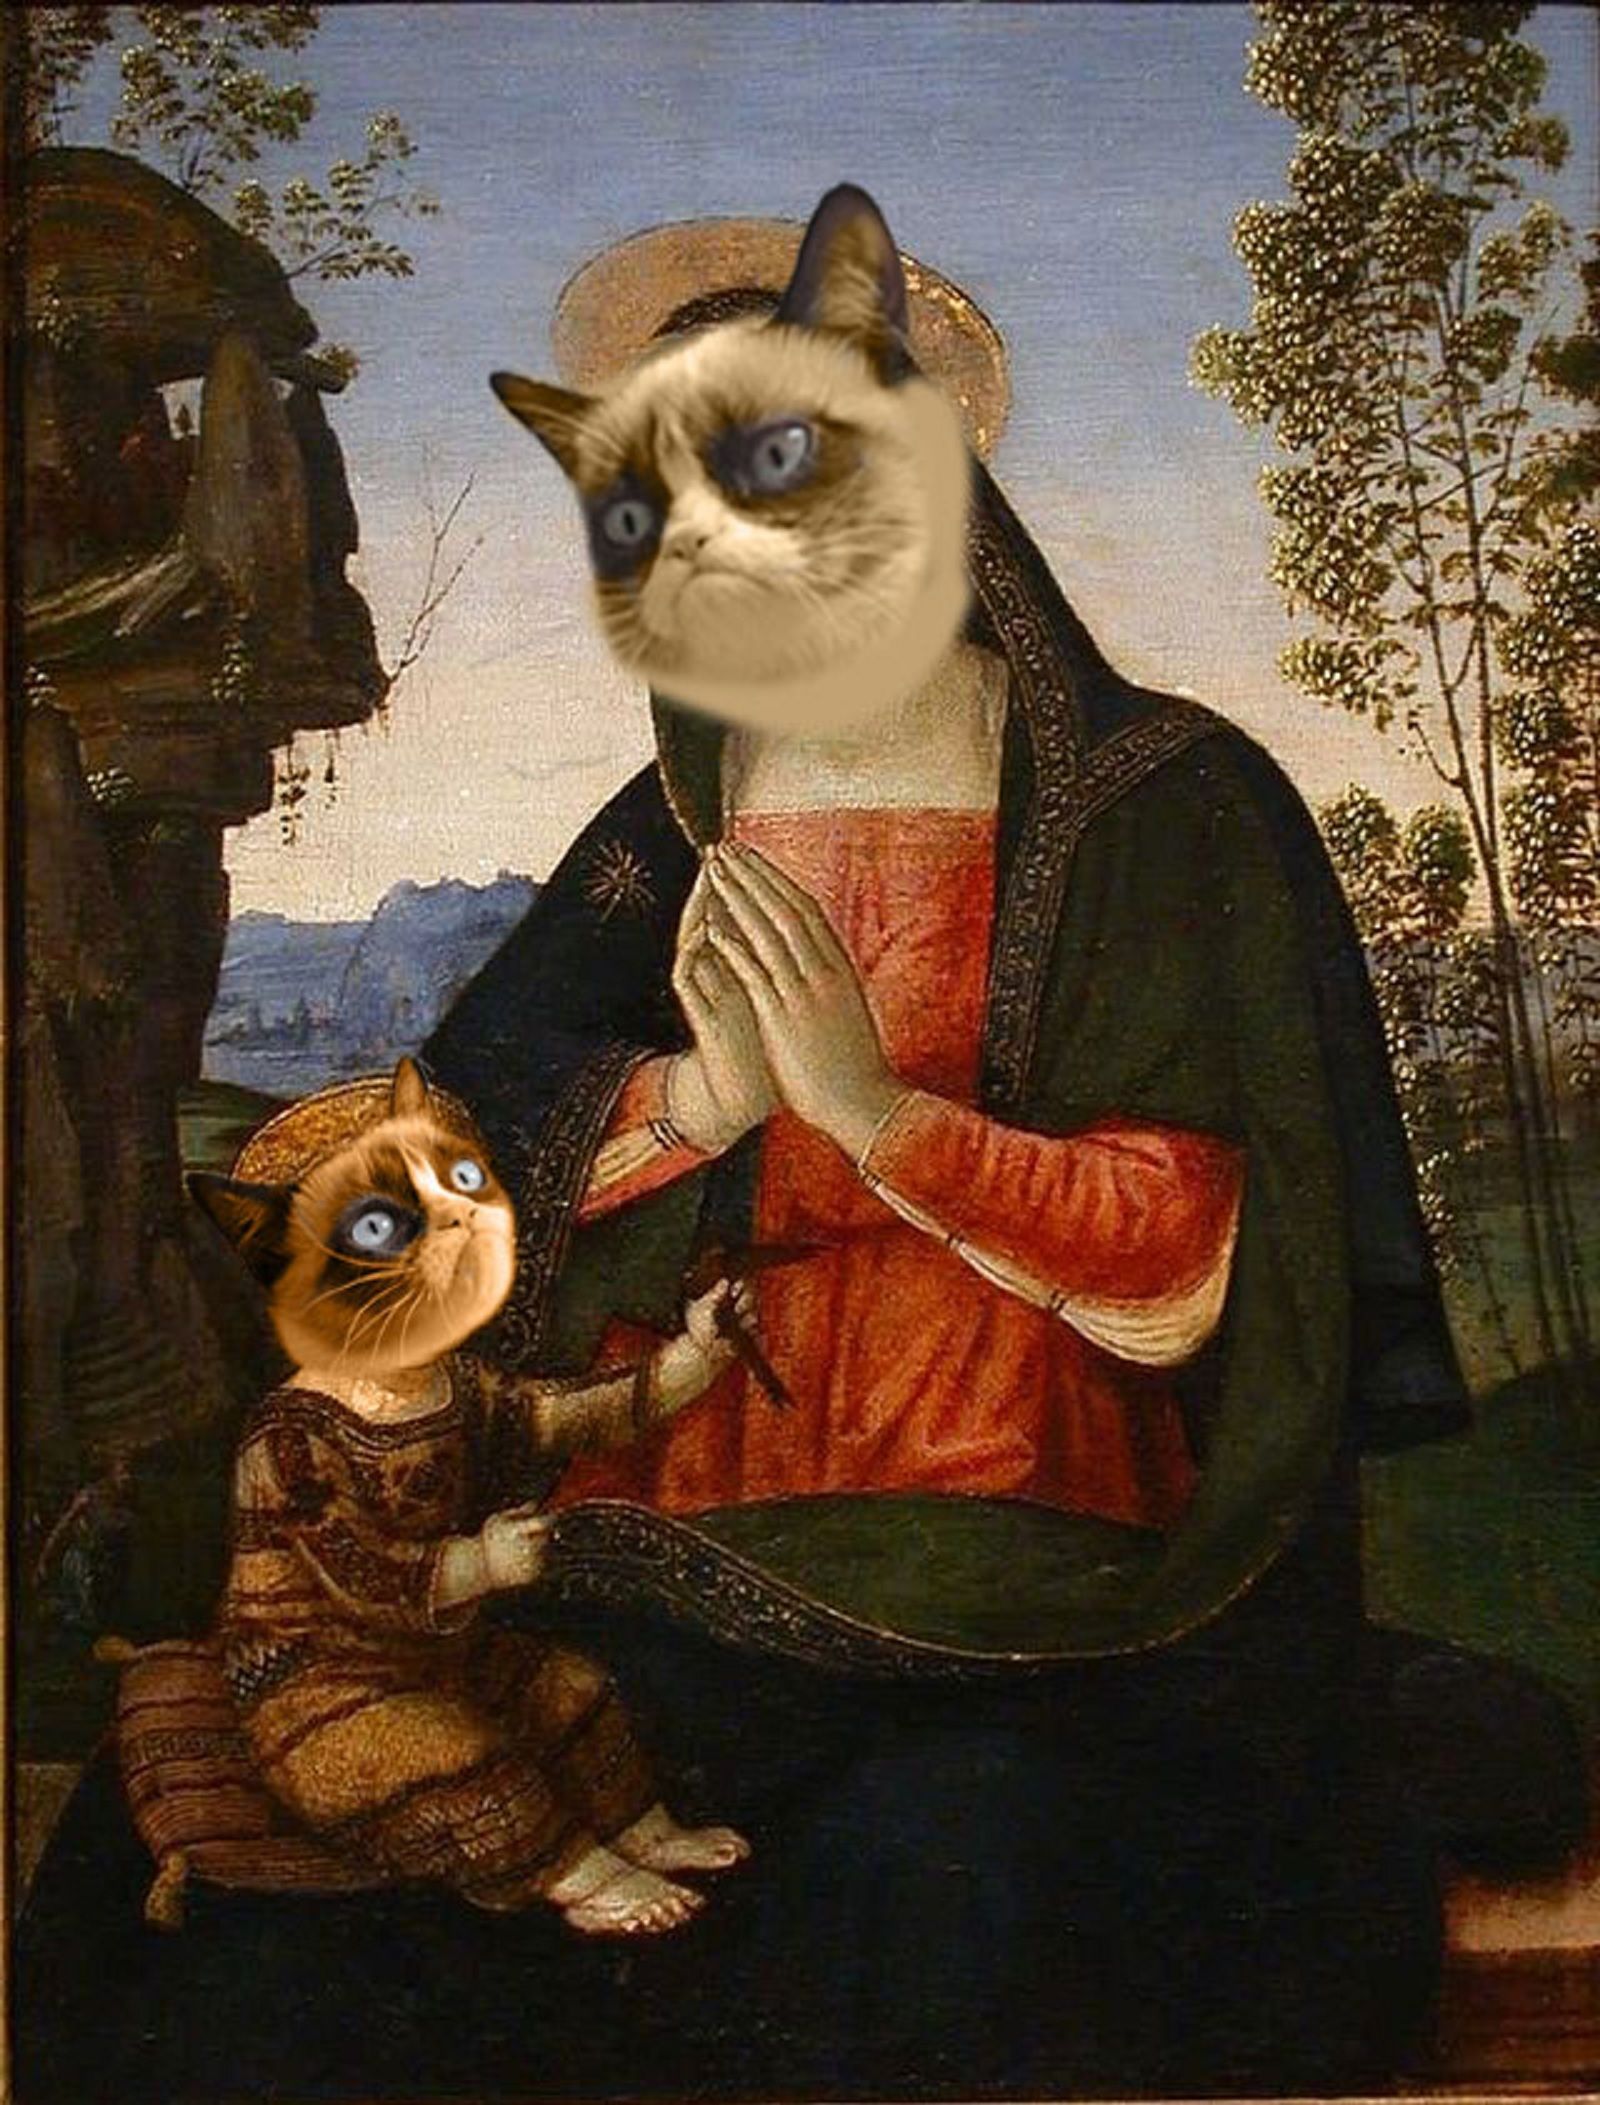 Amusing Images Of Animals Photoshopped Into Renaissance Paintings image 5